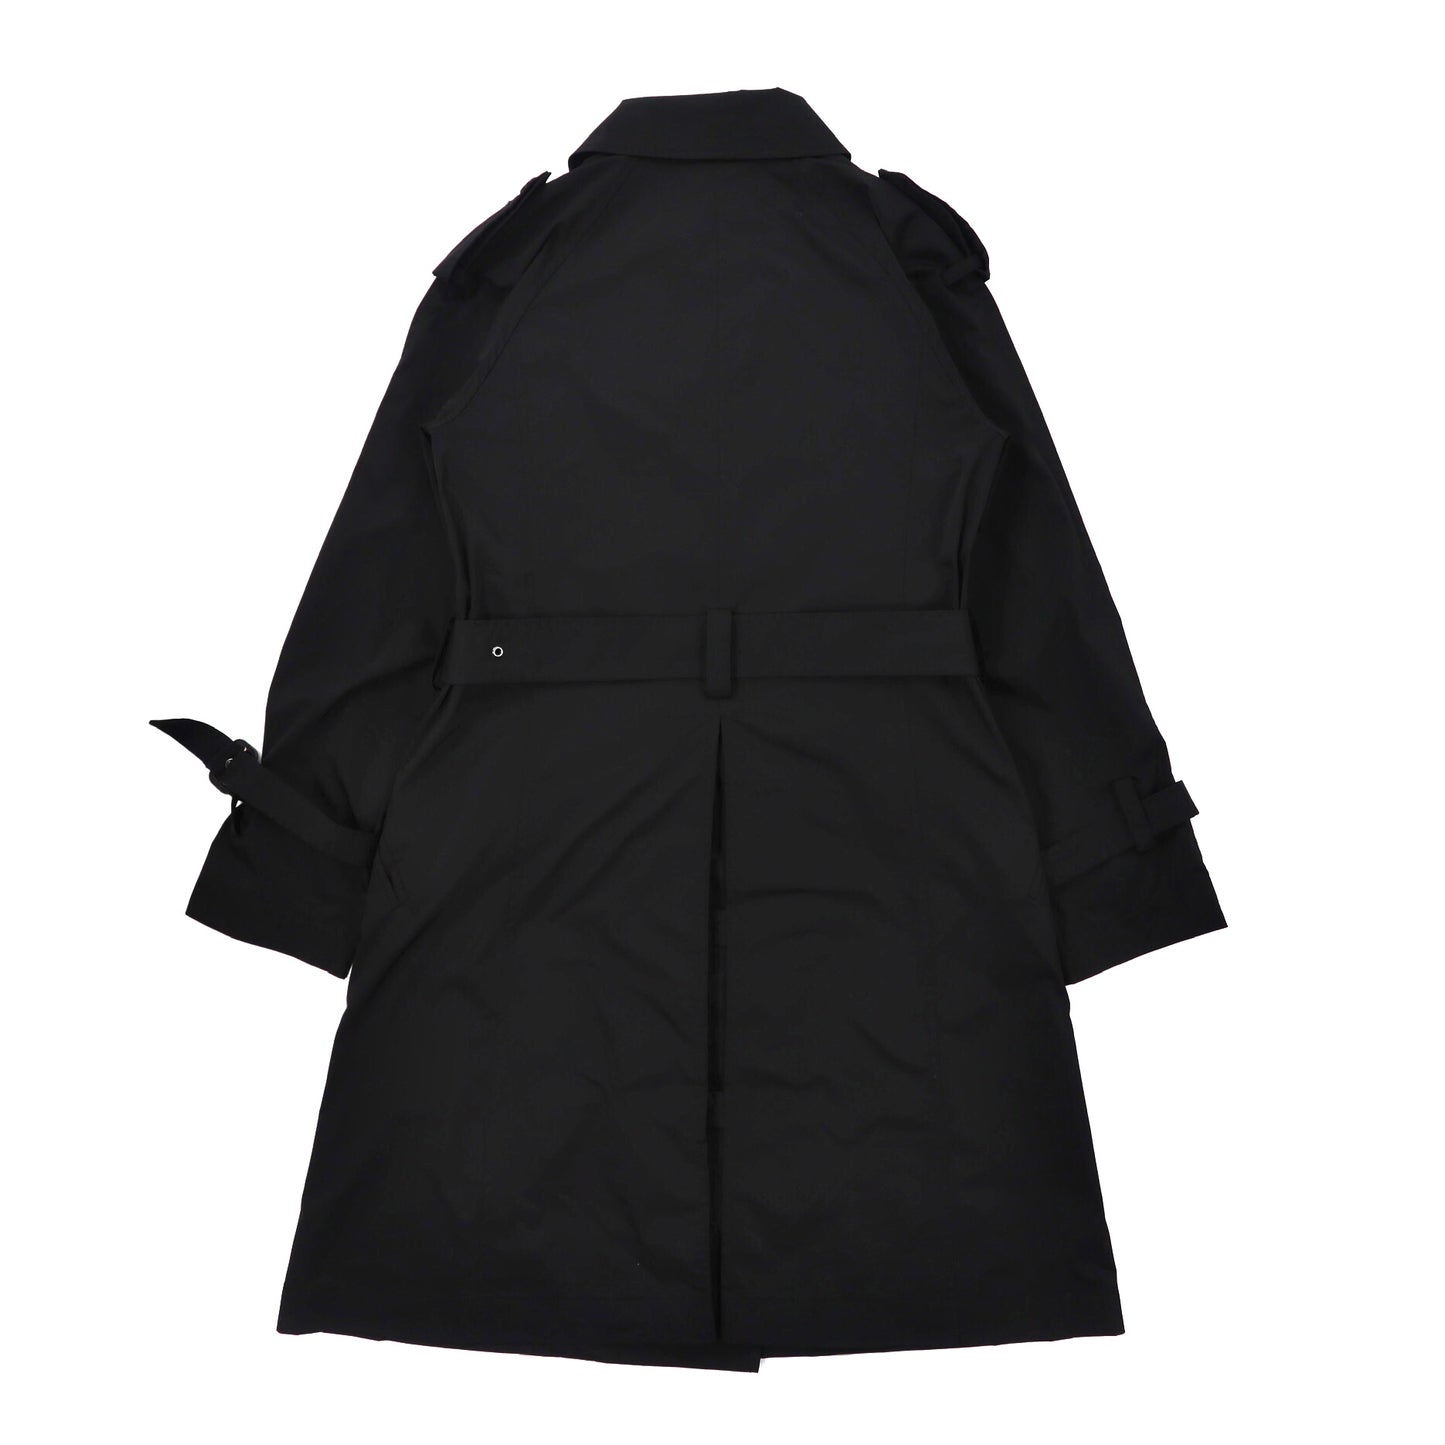 L'EQUIPE YOSHIE INABA (Bigi) Coat 38 Black polyester Japan MADE